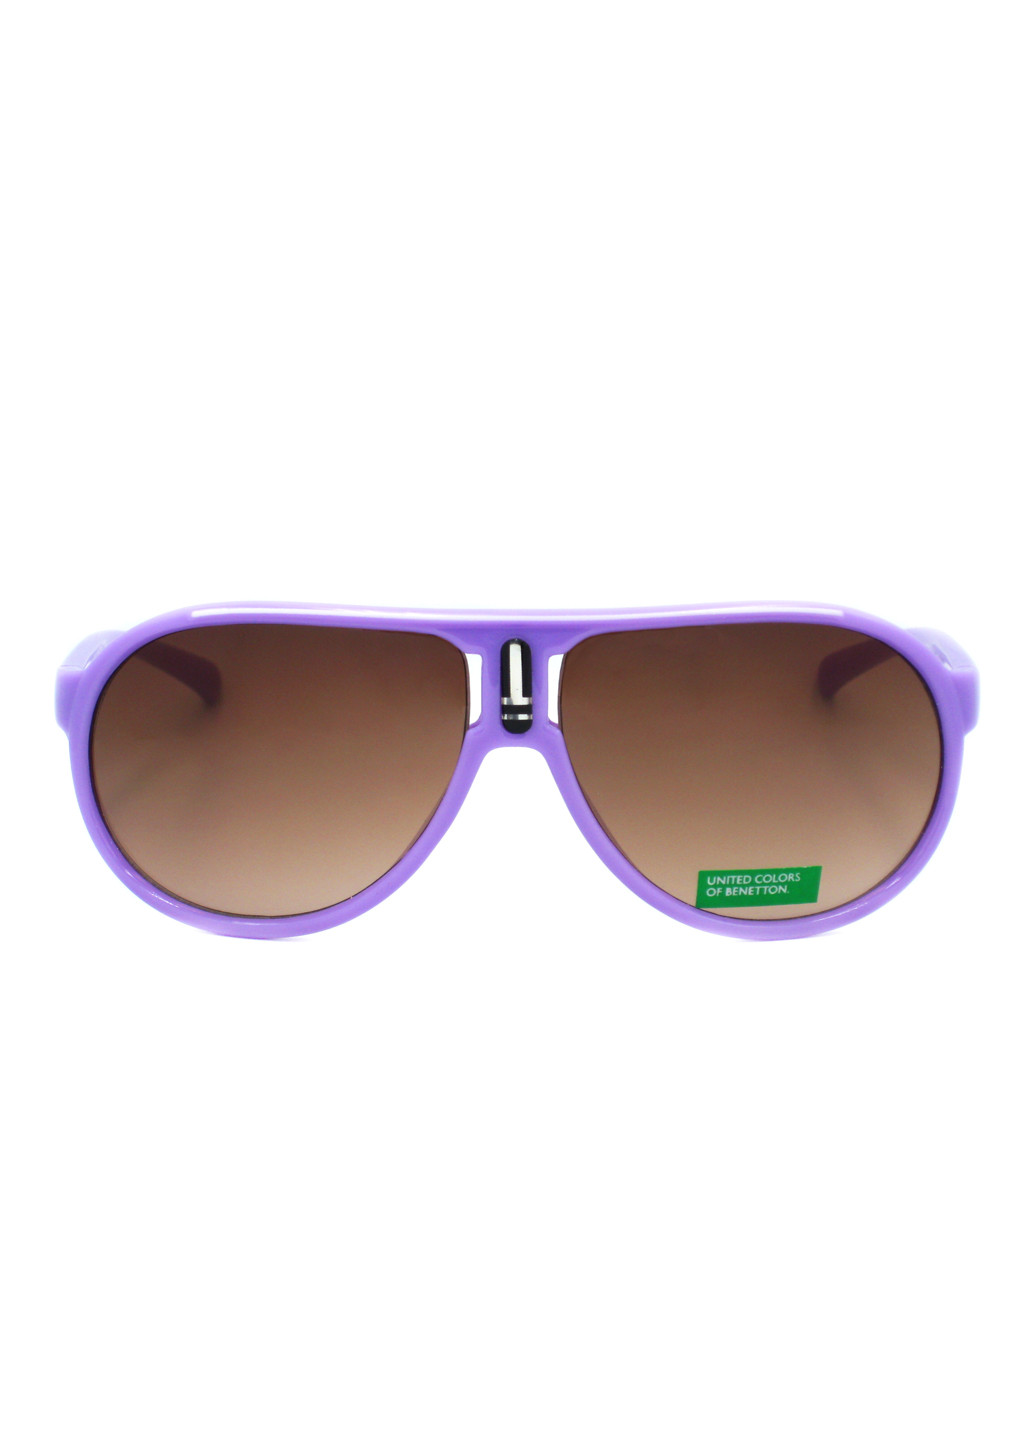 Сонцезахиснi окуляри United Colors of Benetton bb524s (260947020)